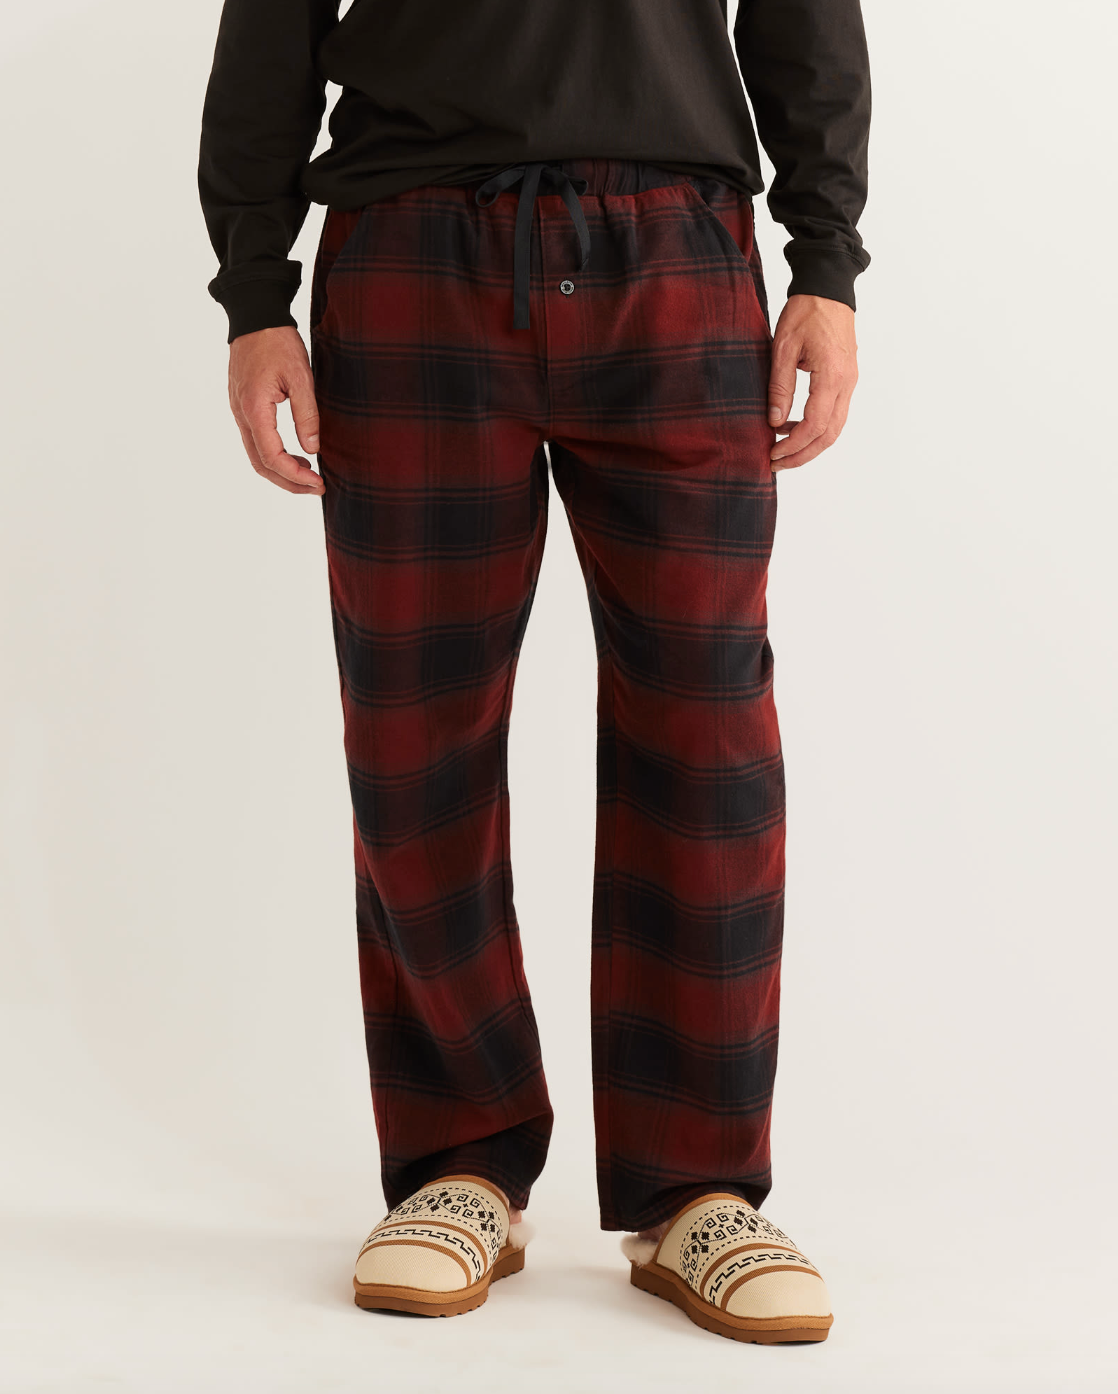 Mens Red and Black Plaid Pajama Pants